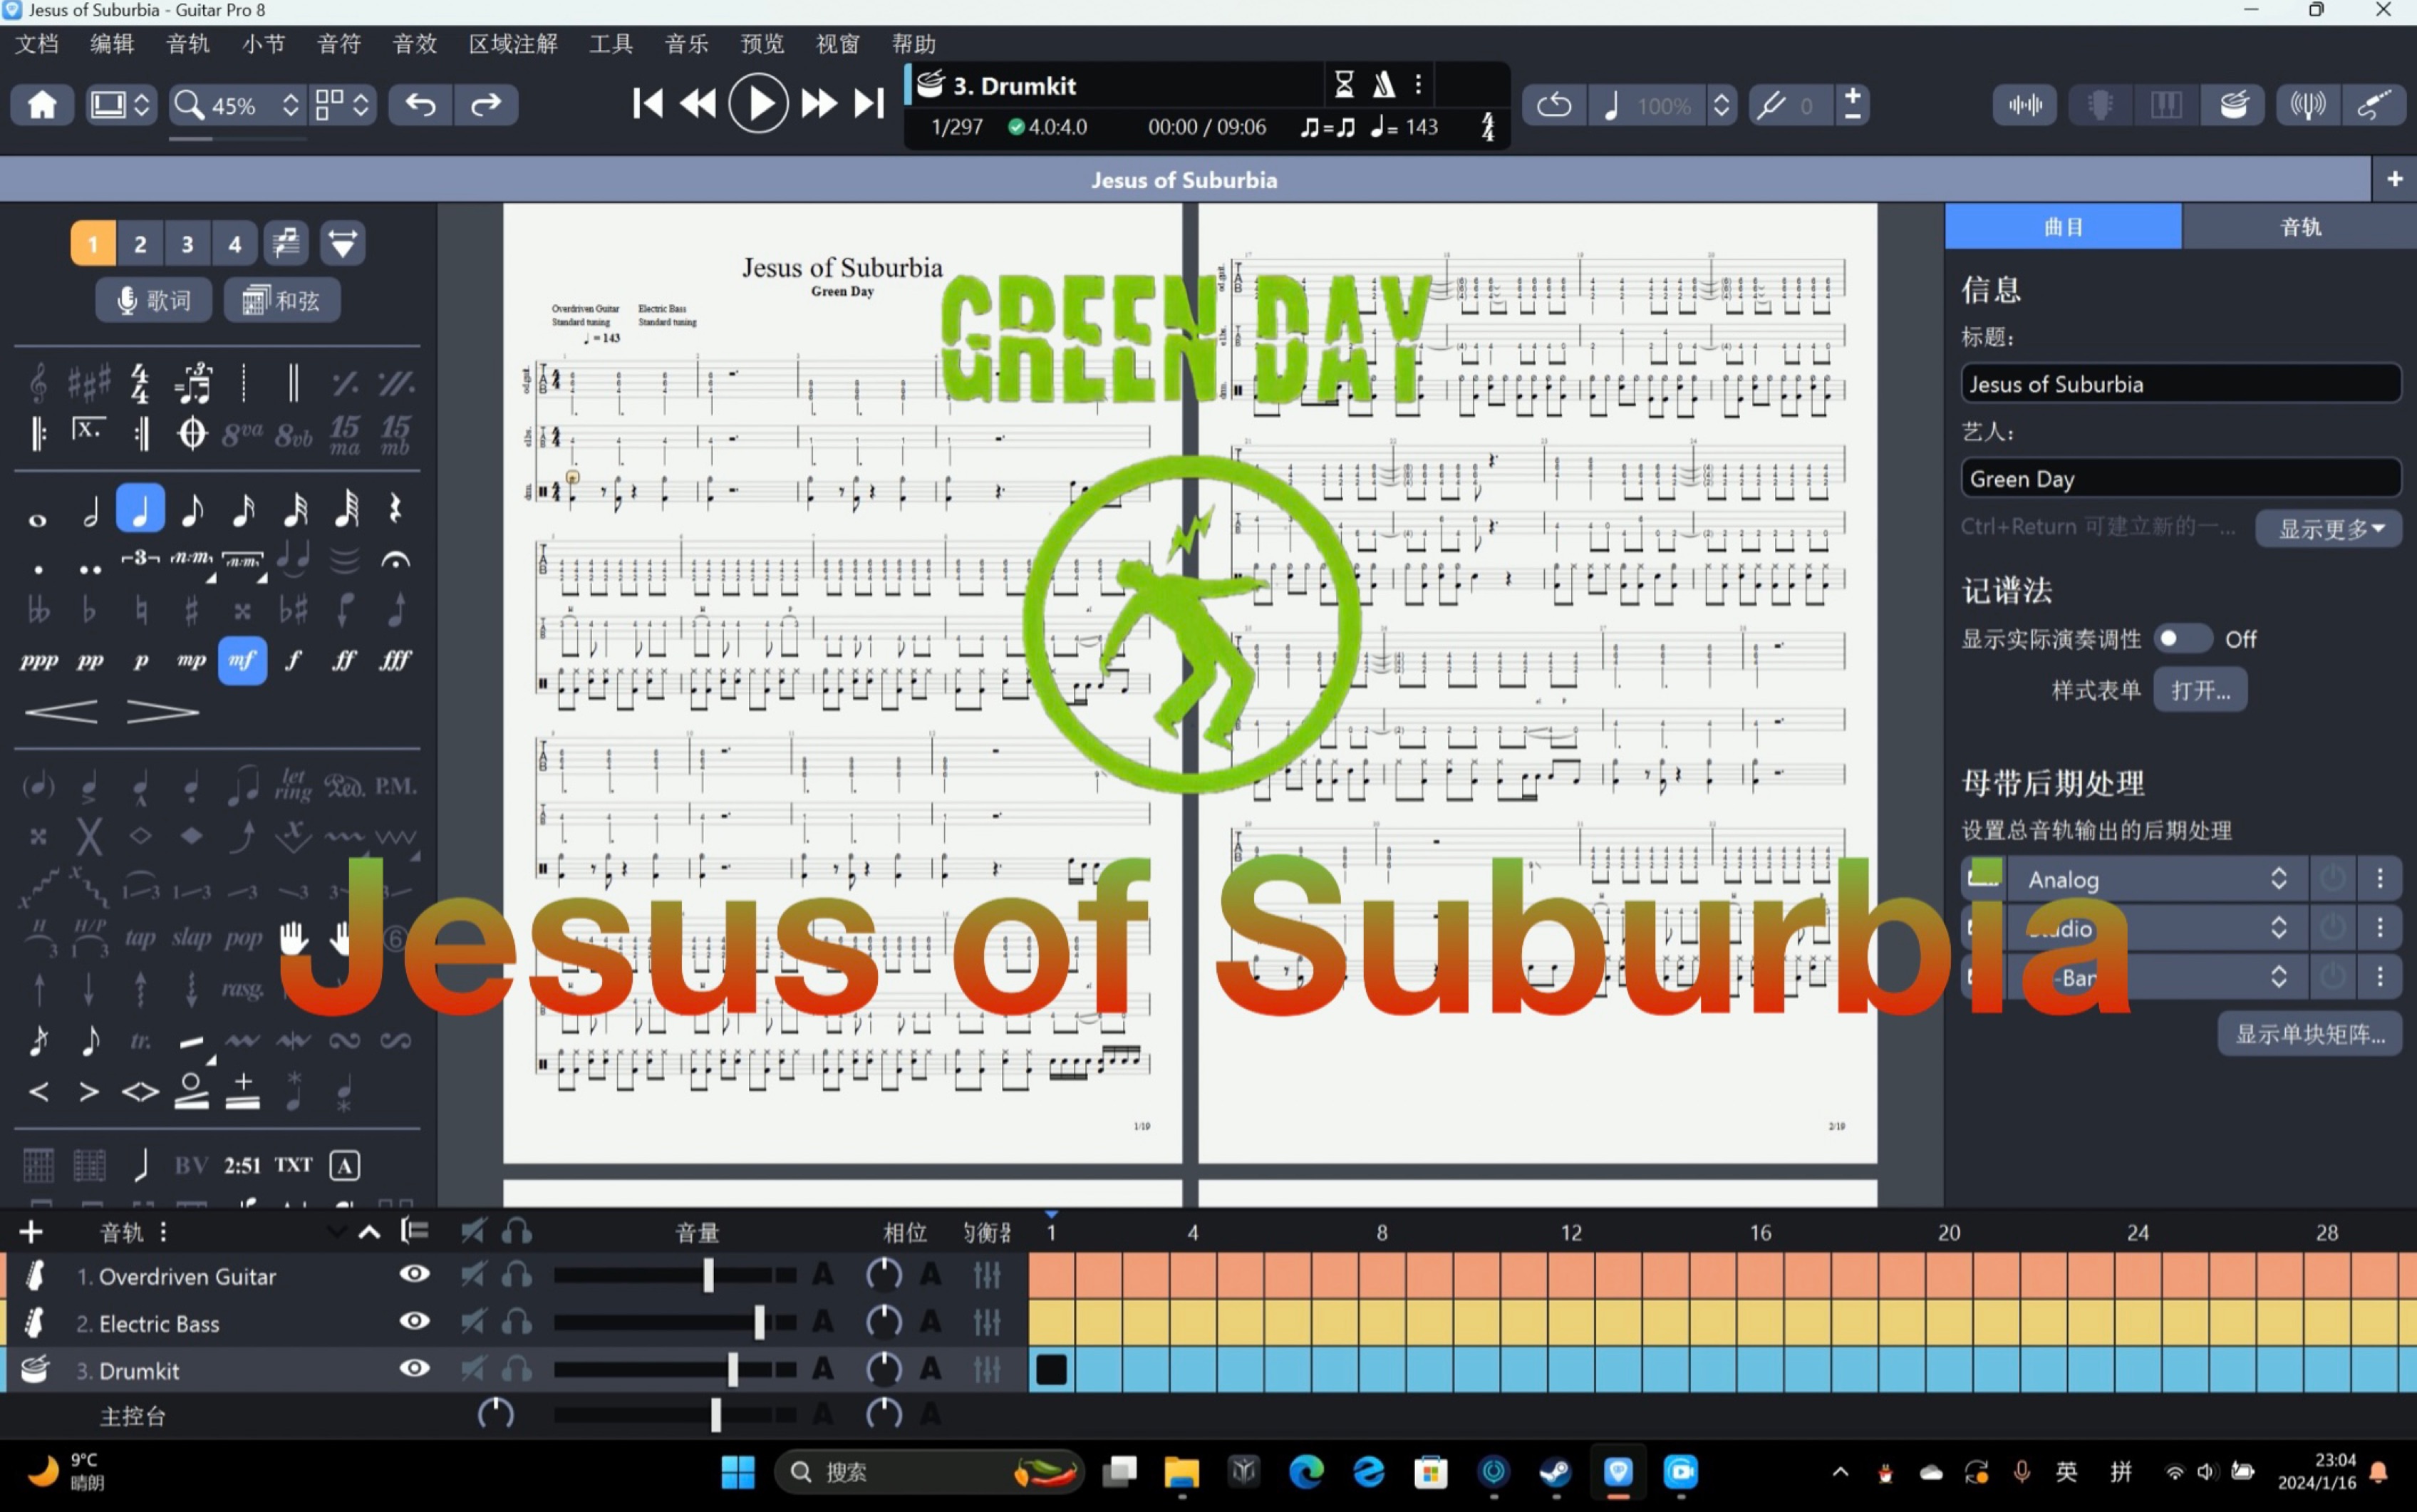 [图]【总谱】Green Day—Jesus of Suburbia  歌曲“史诗”和一个“伟大的摇滚歌剧表演”